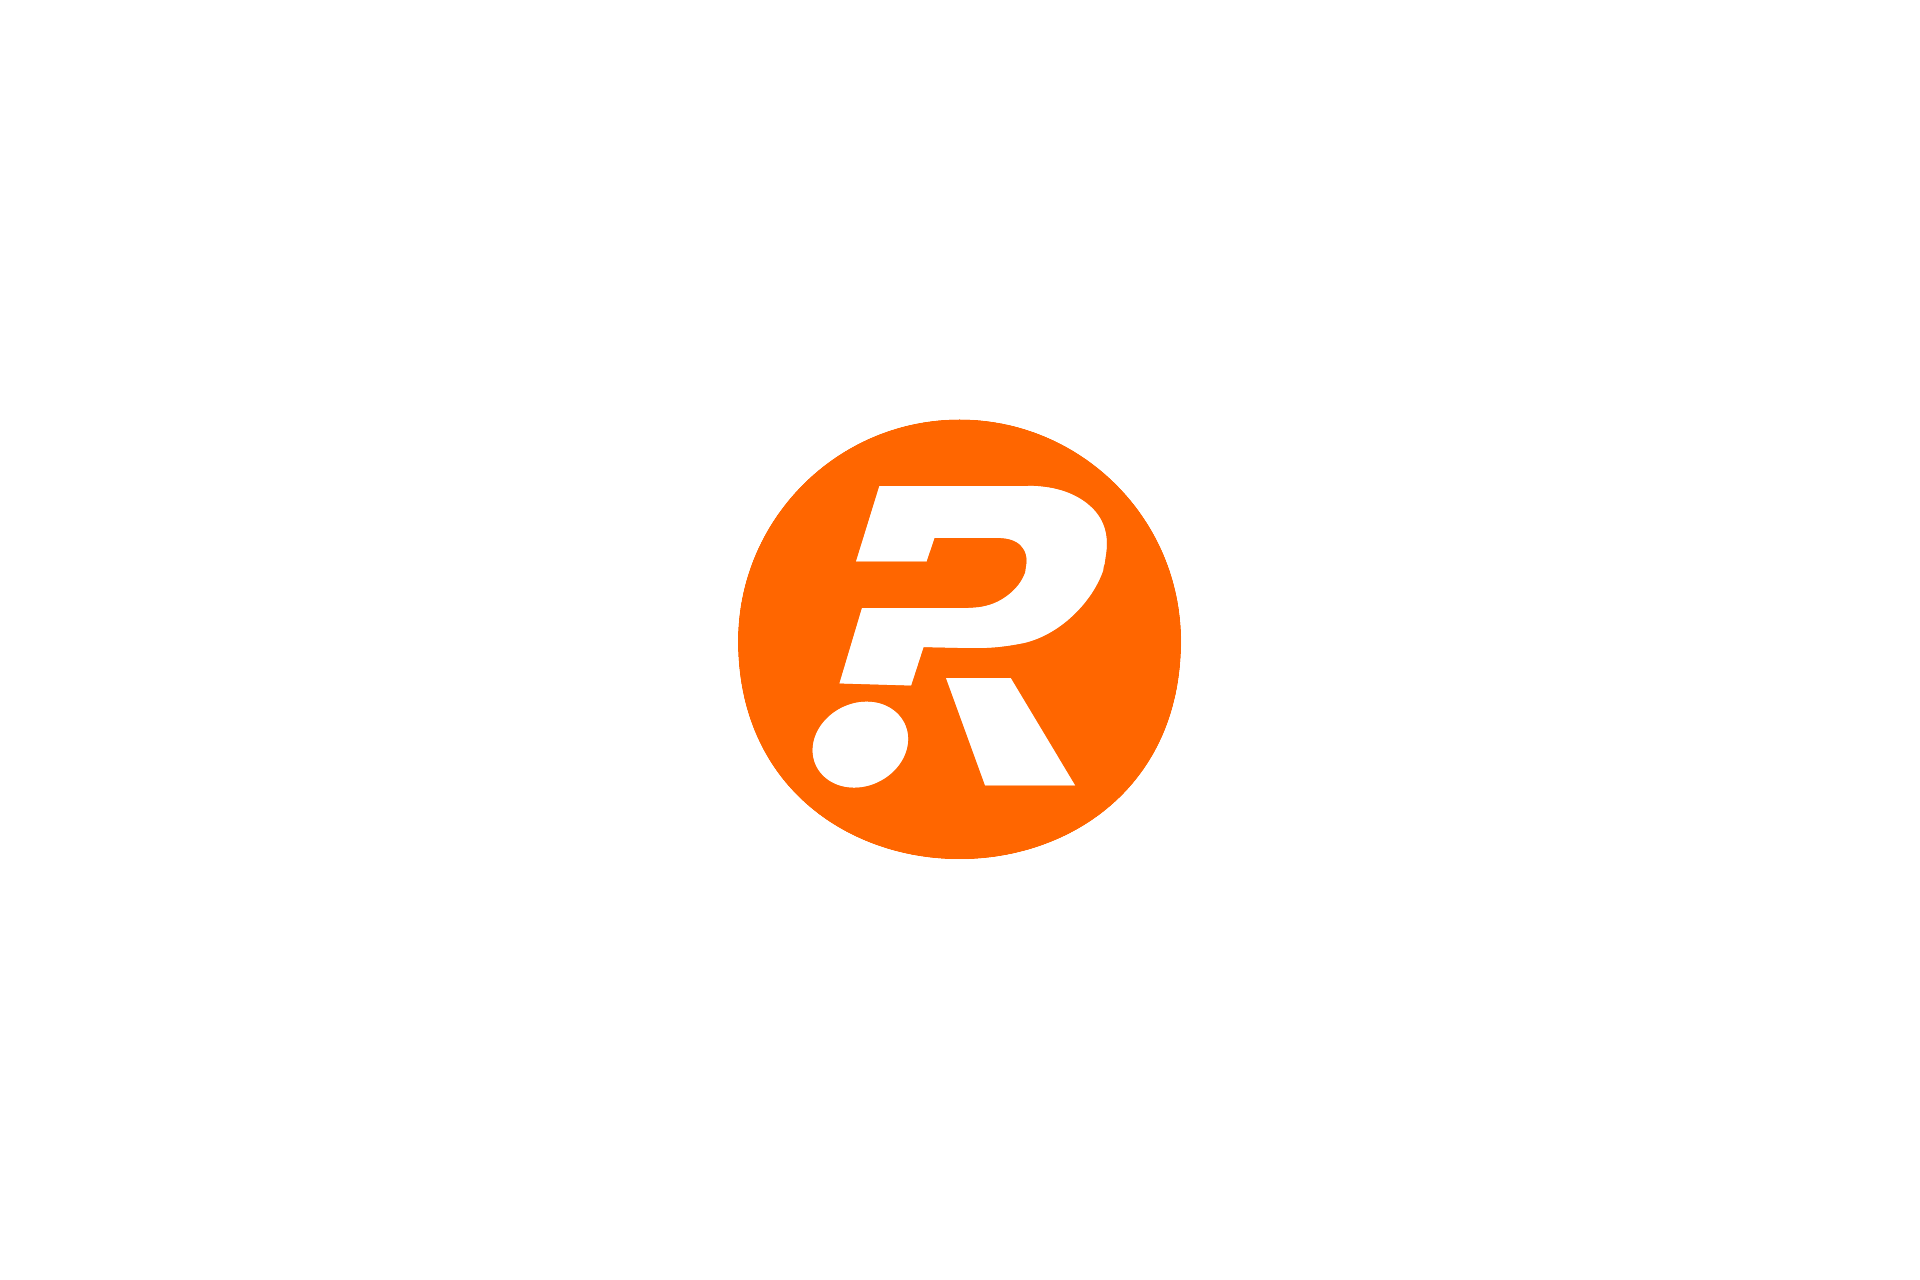 logo Rowery.org